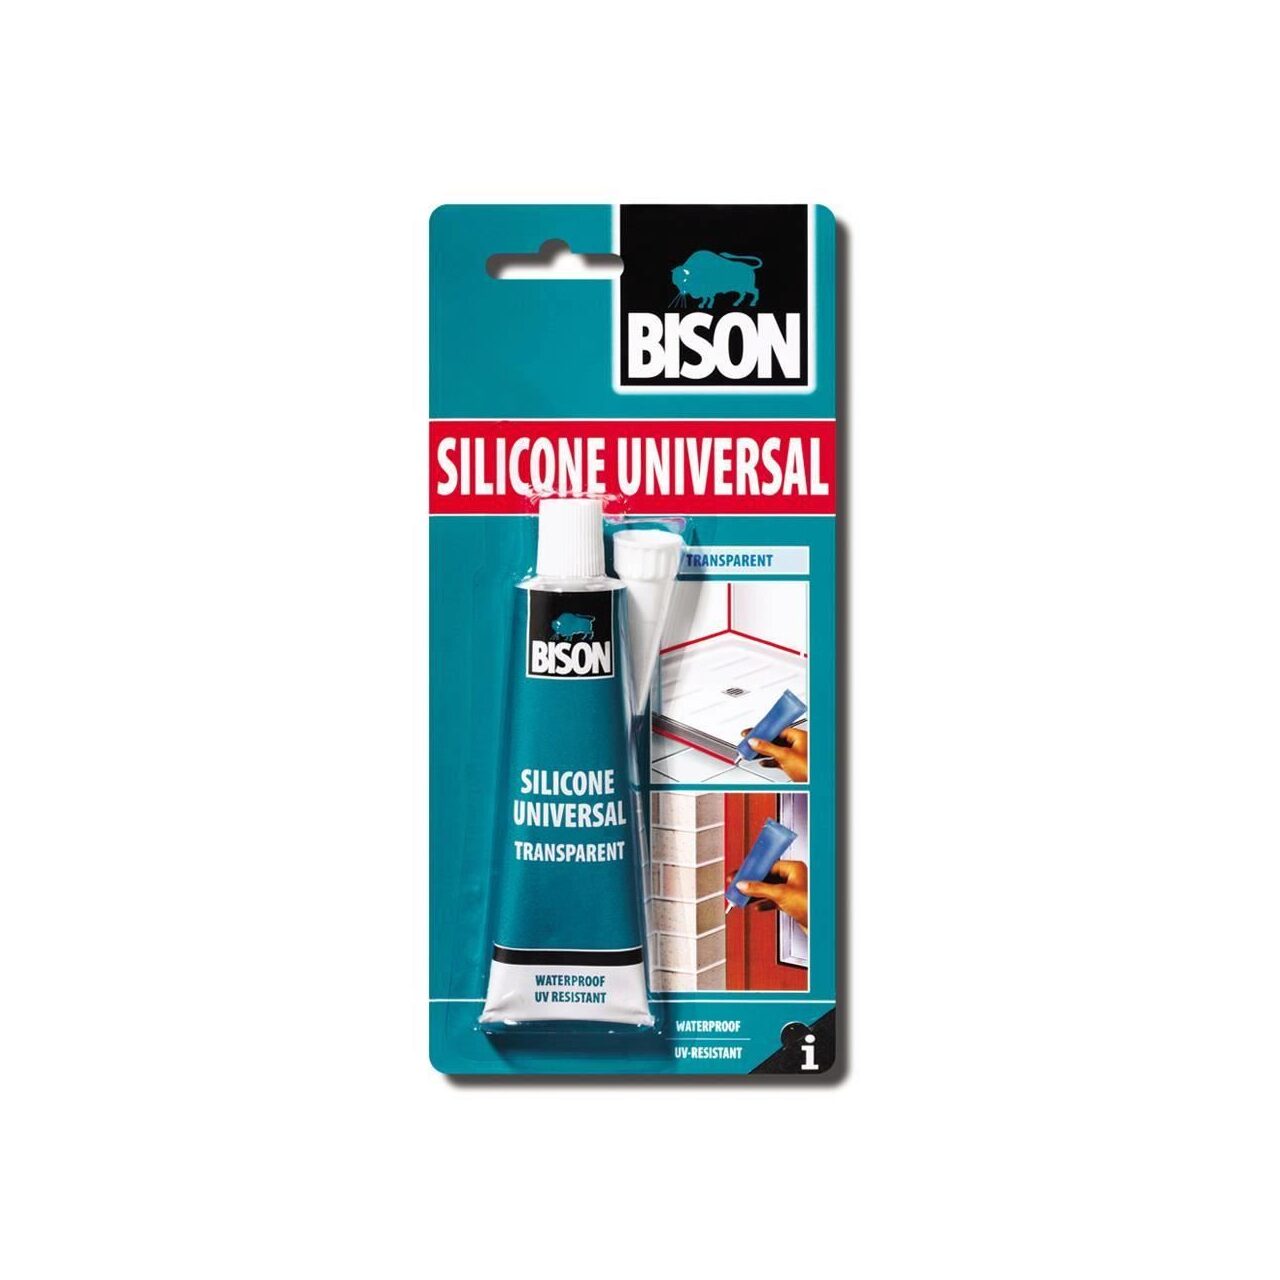 Silicon Universal BISON, transparent, 60ml